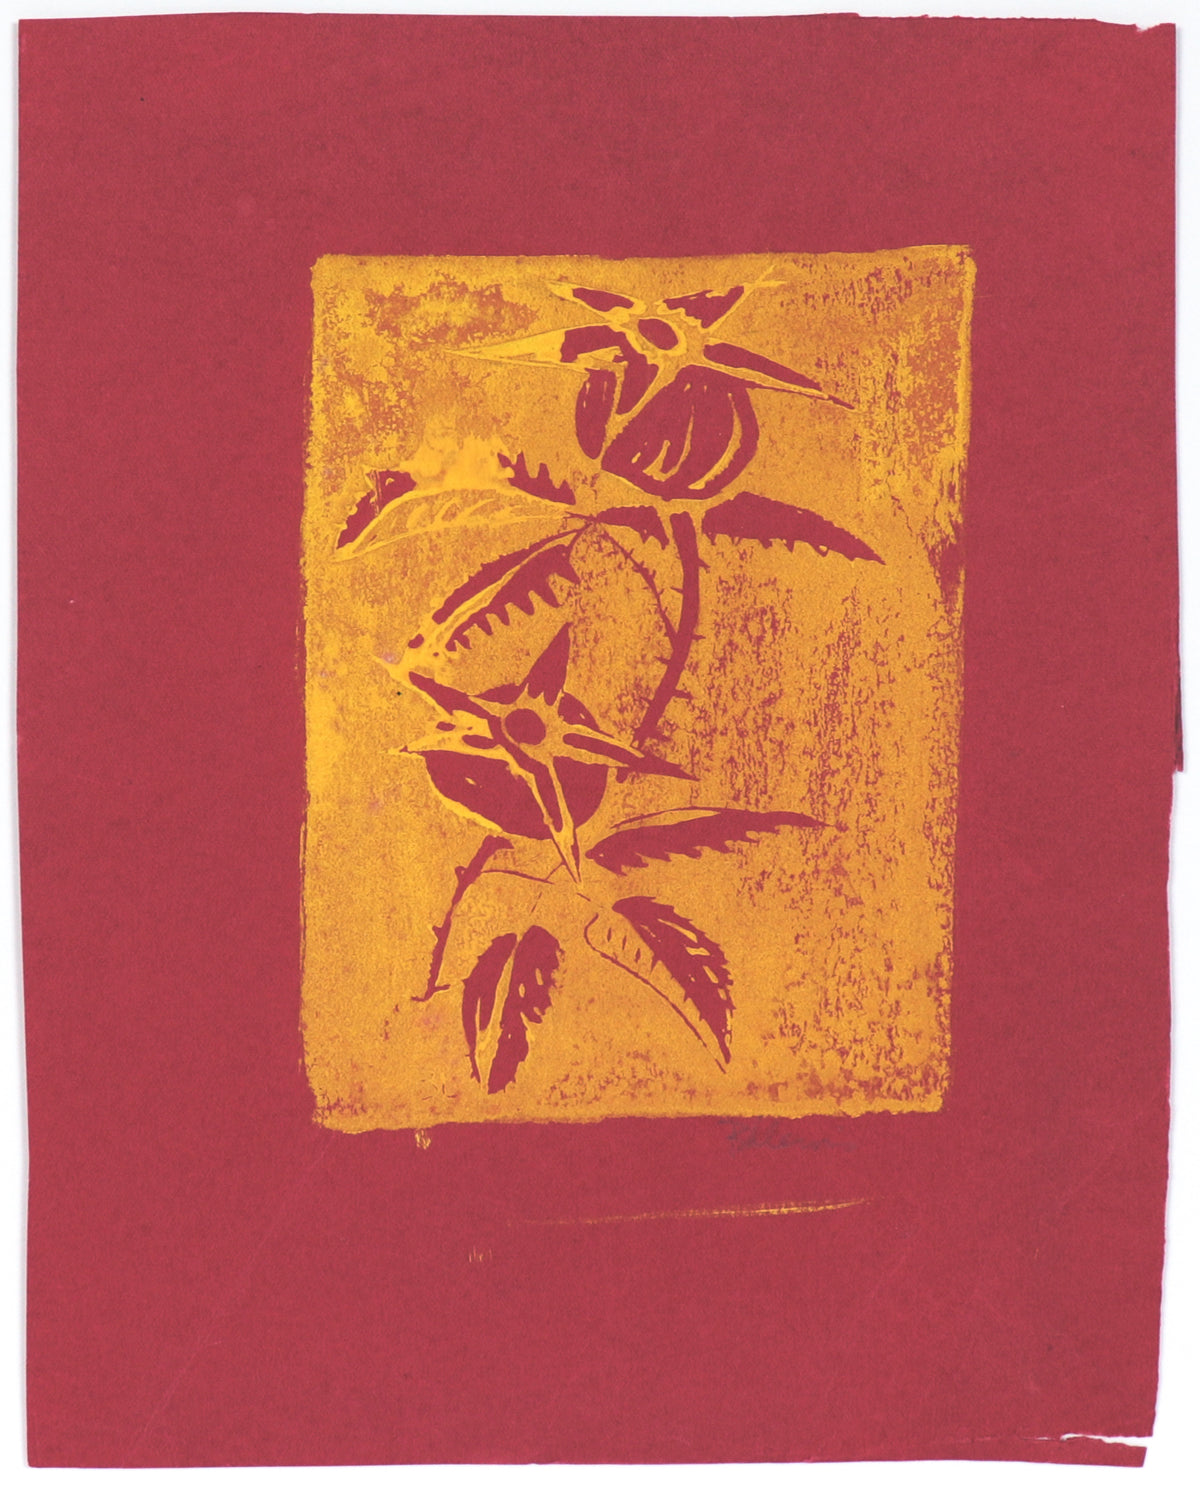 Red &amp; Yellow Floral Study&lt;br&gt;20th Century Linoleum Block Print&lt;br&gt;&lt;br&gt;#C4428